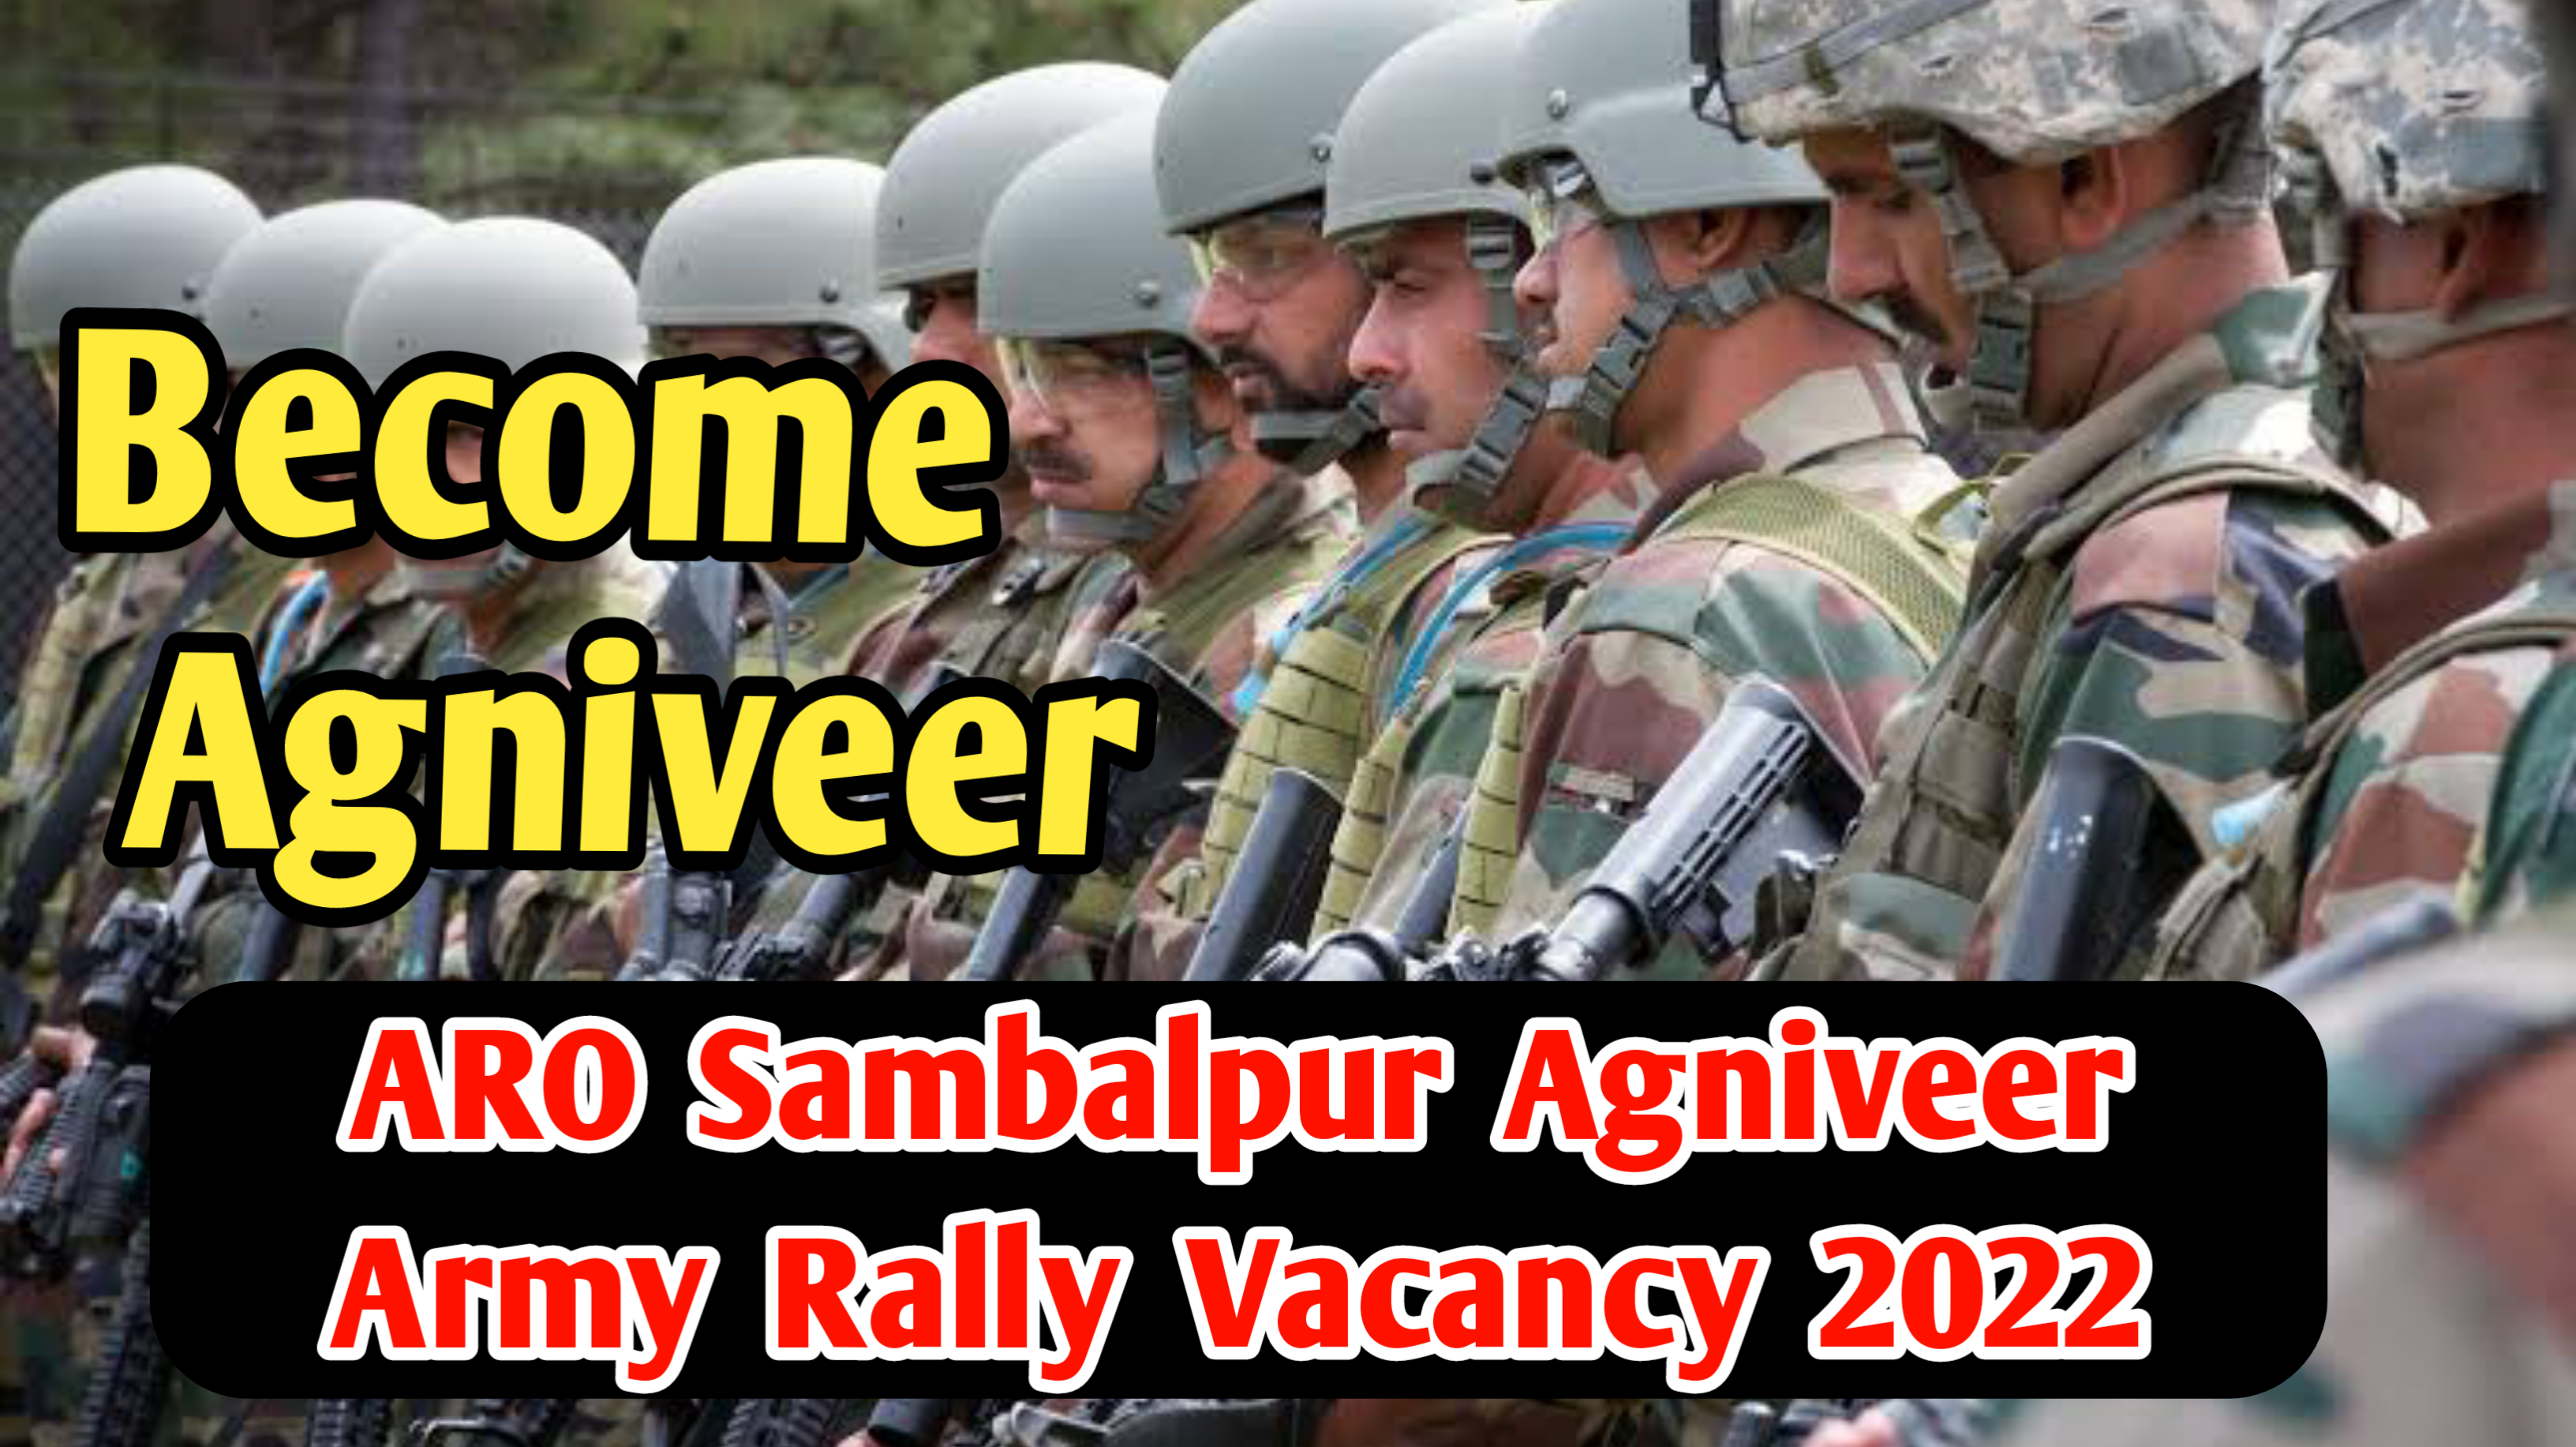 ARO Sambalpur Agniveer Army Rally Vacancy 2022